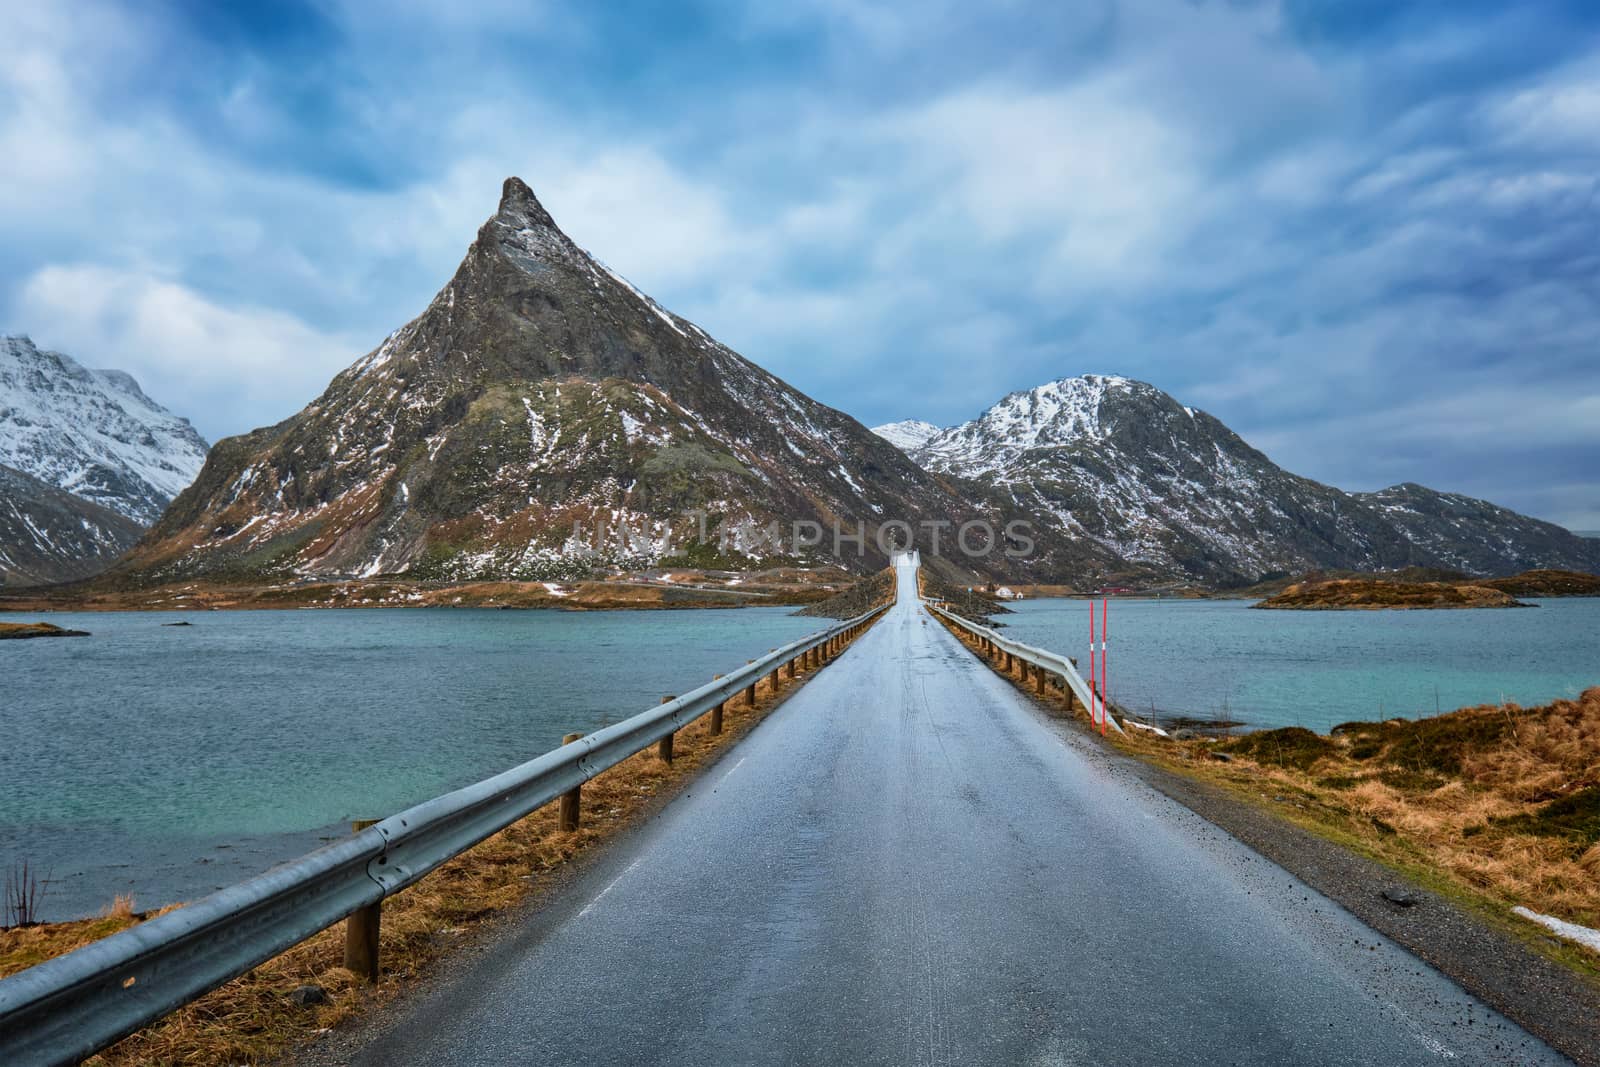 Road in Norway in winter by dimol